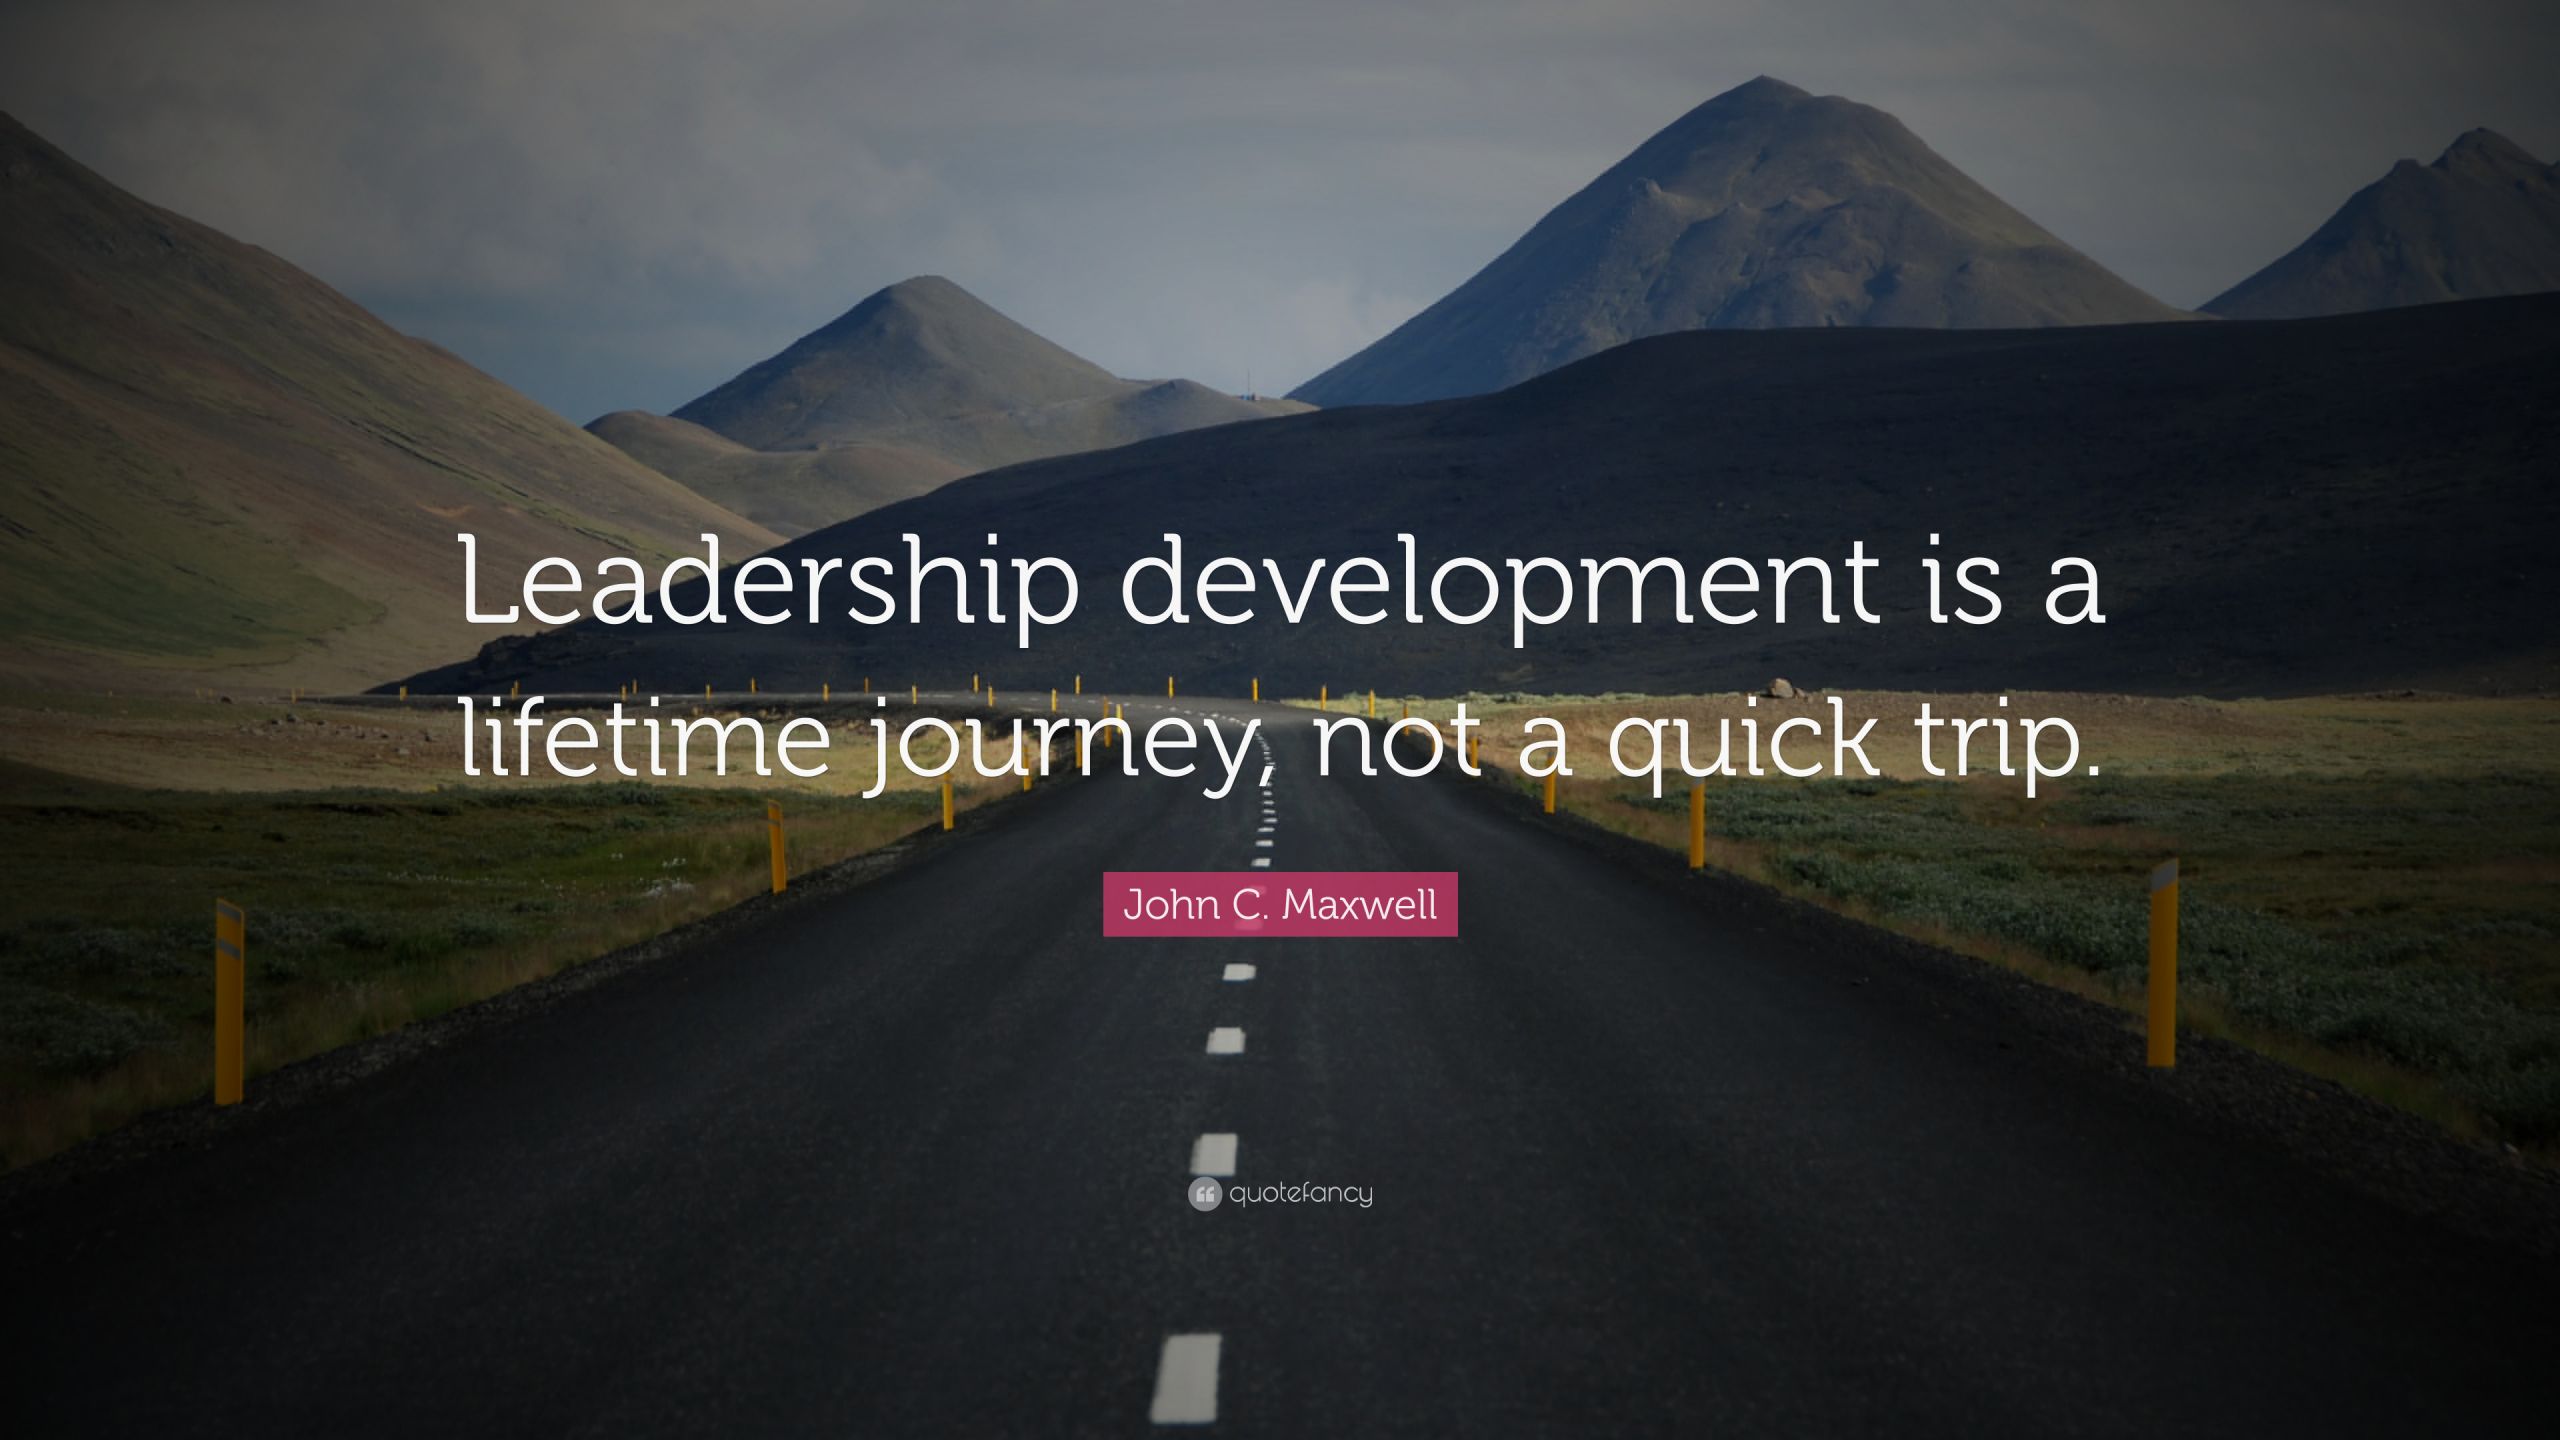 Leadership Development Quotes
 John C Maxwell Quote “Leadership development is a